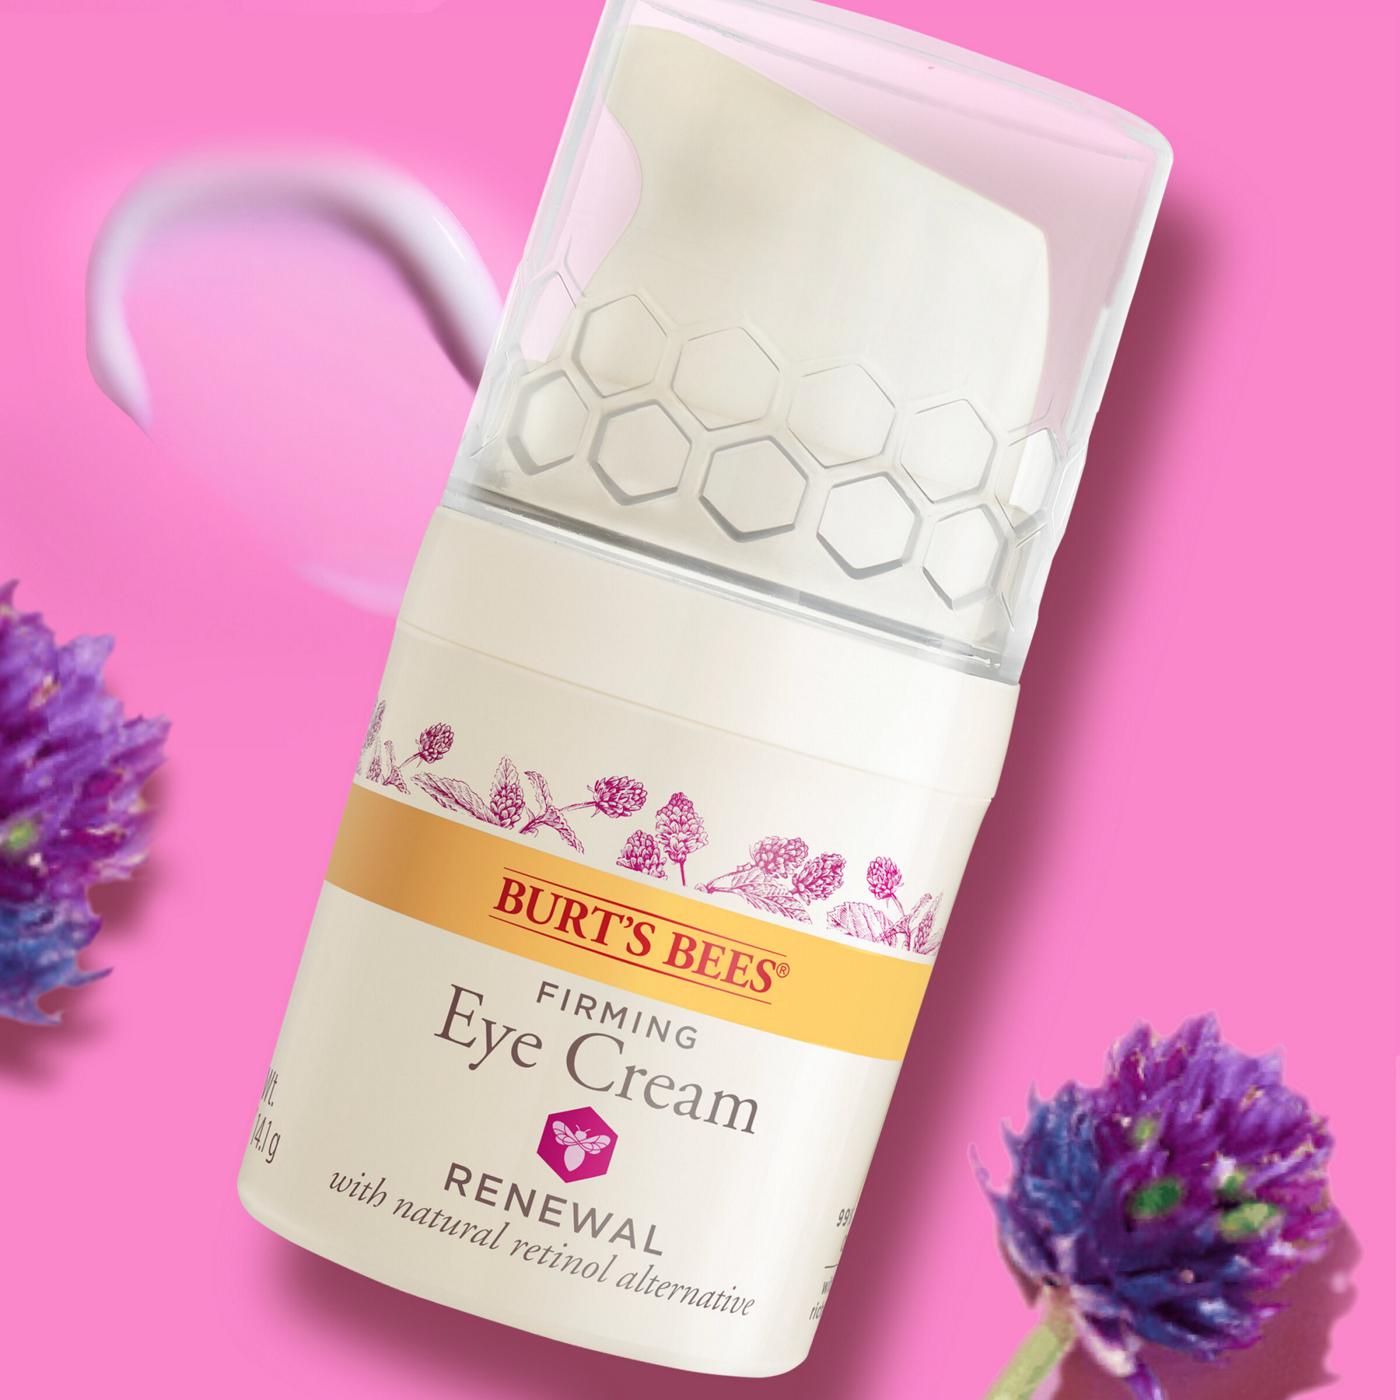 Burt's Bees Renewal Firming Eye Cream with Bakuchiol; image 4 of 15